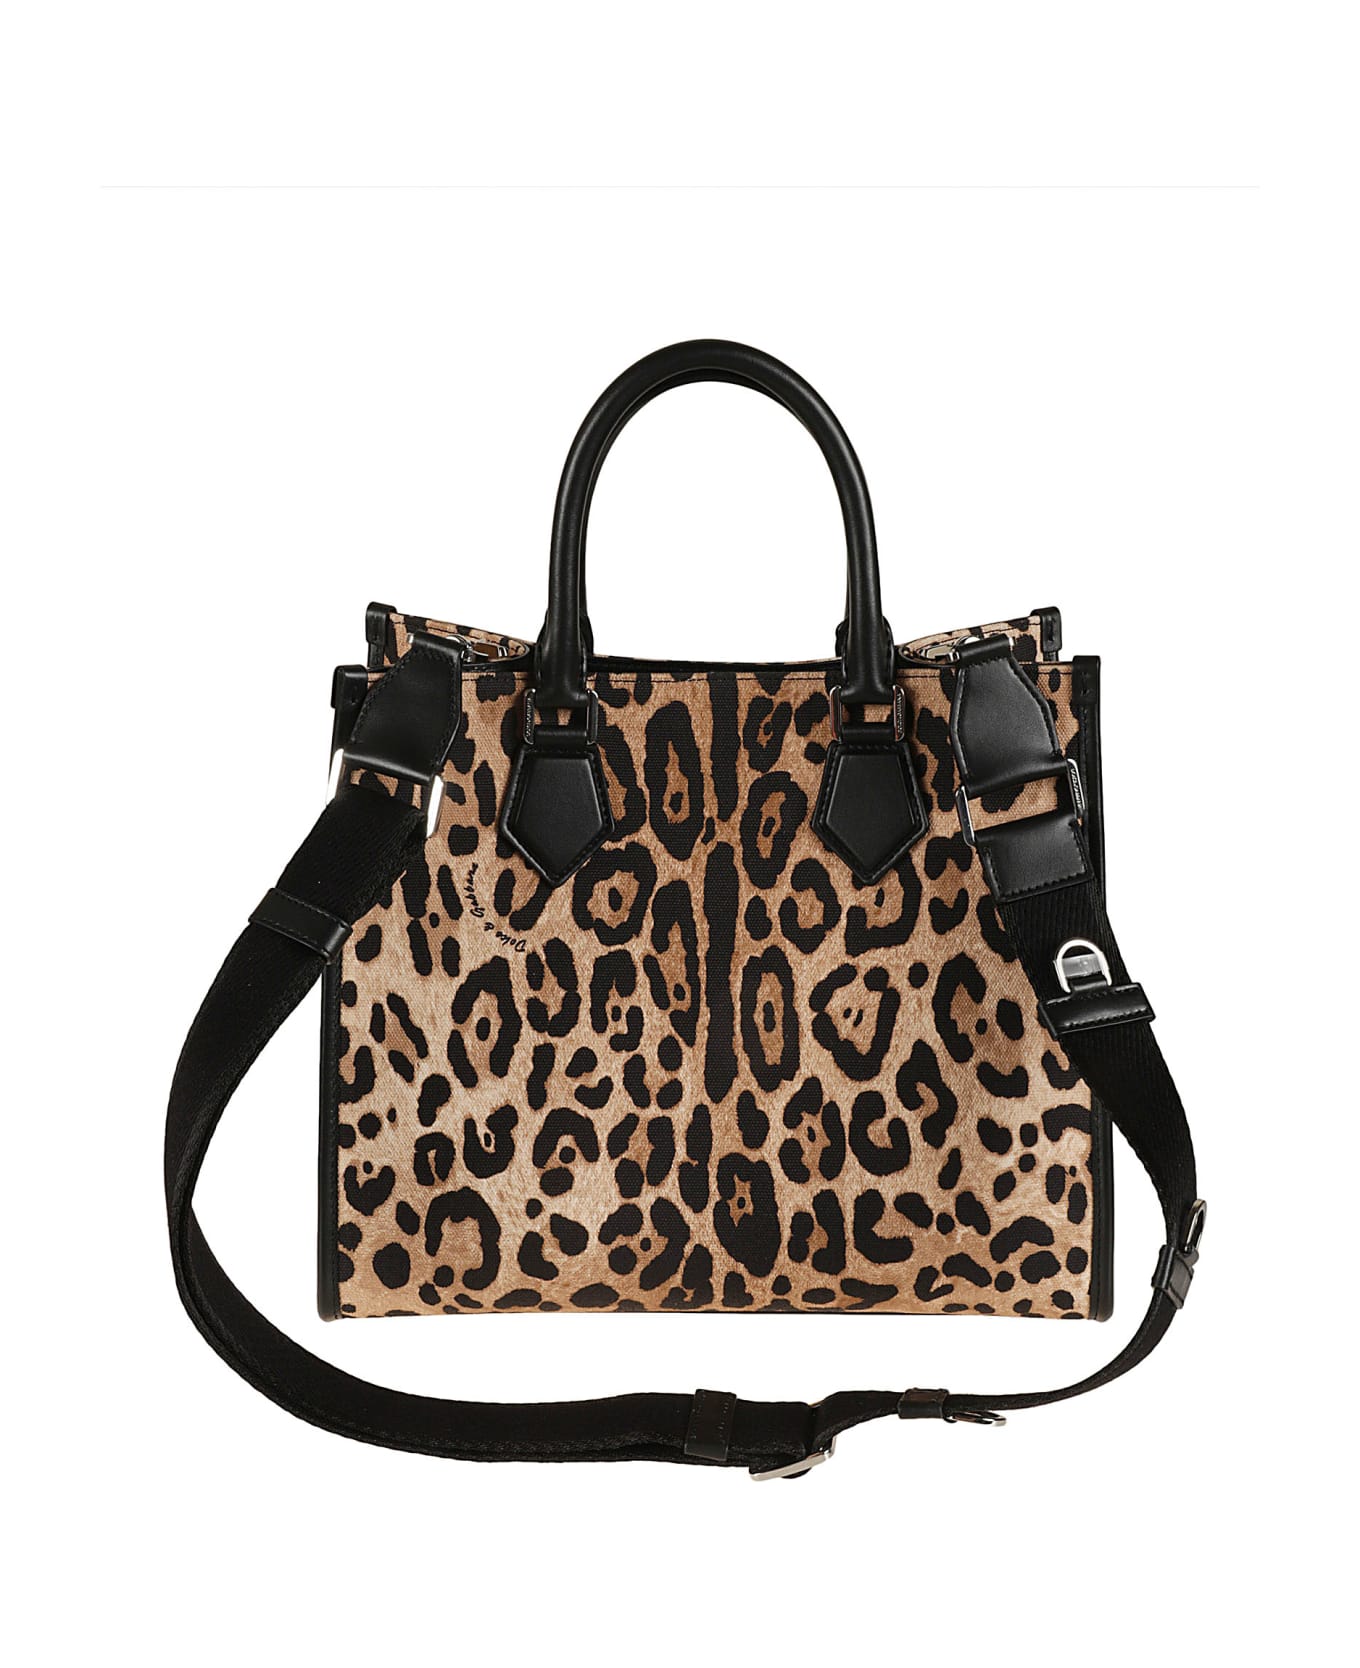 Dolce & Gabbana Logo Plaque Tote - leopard print